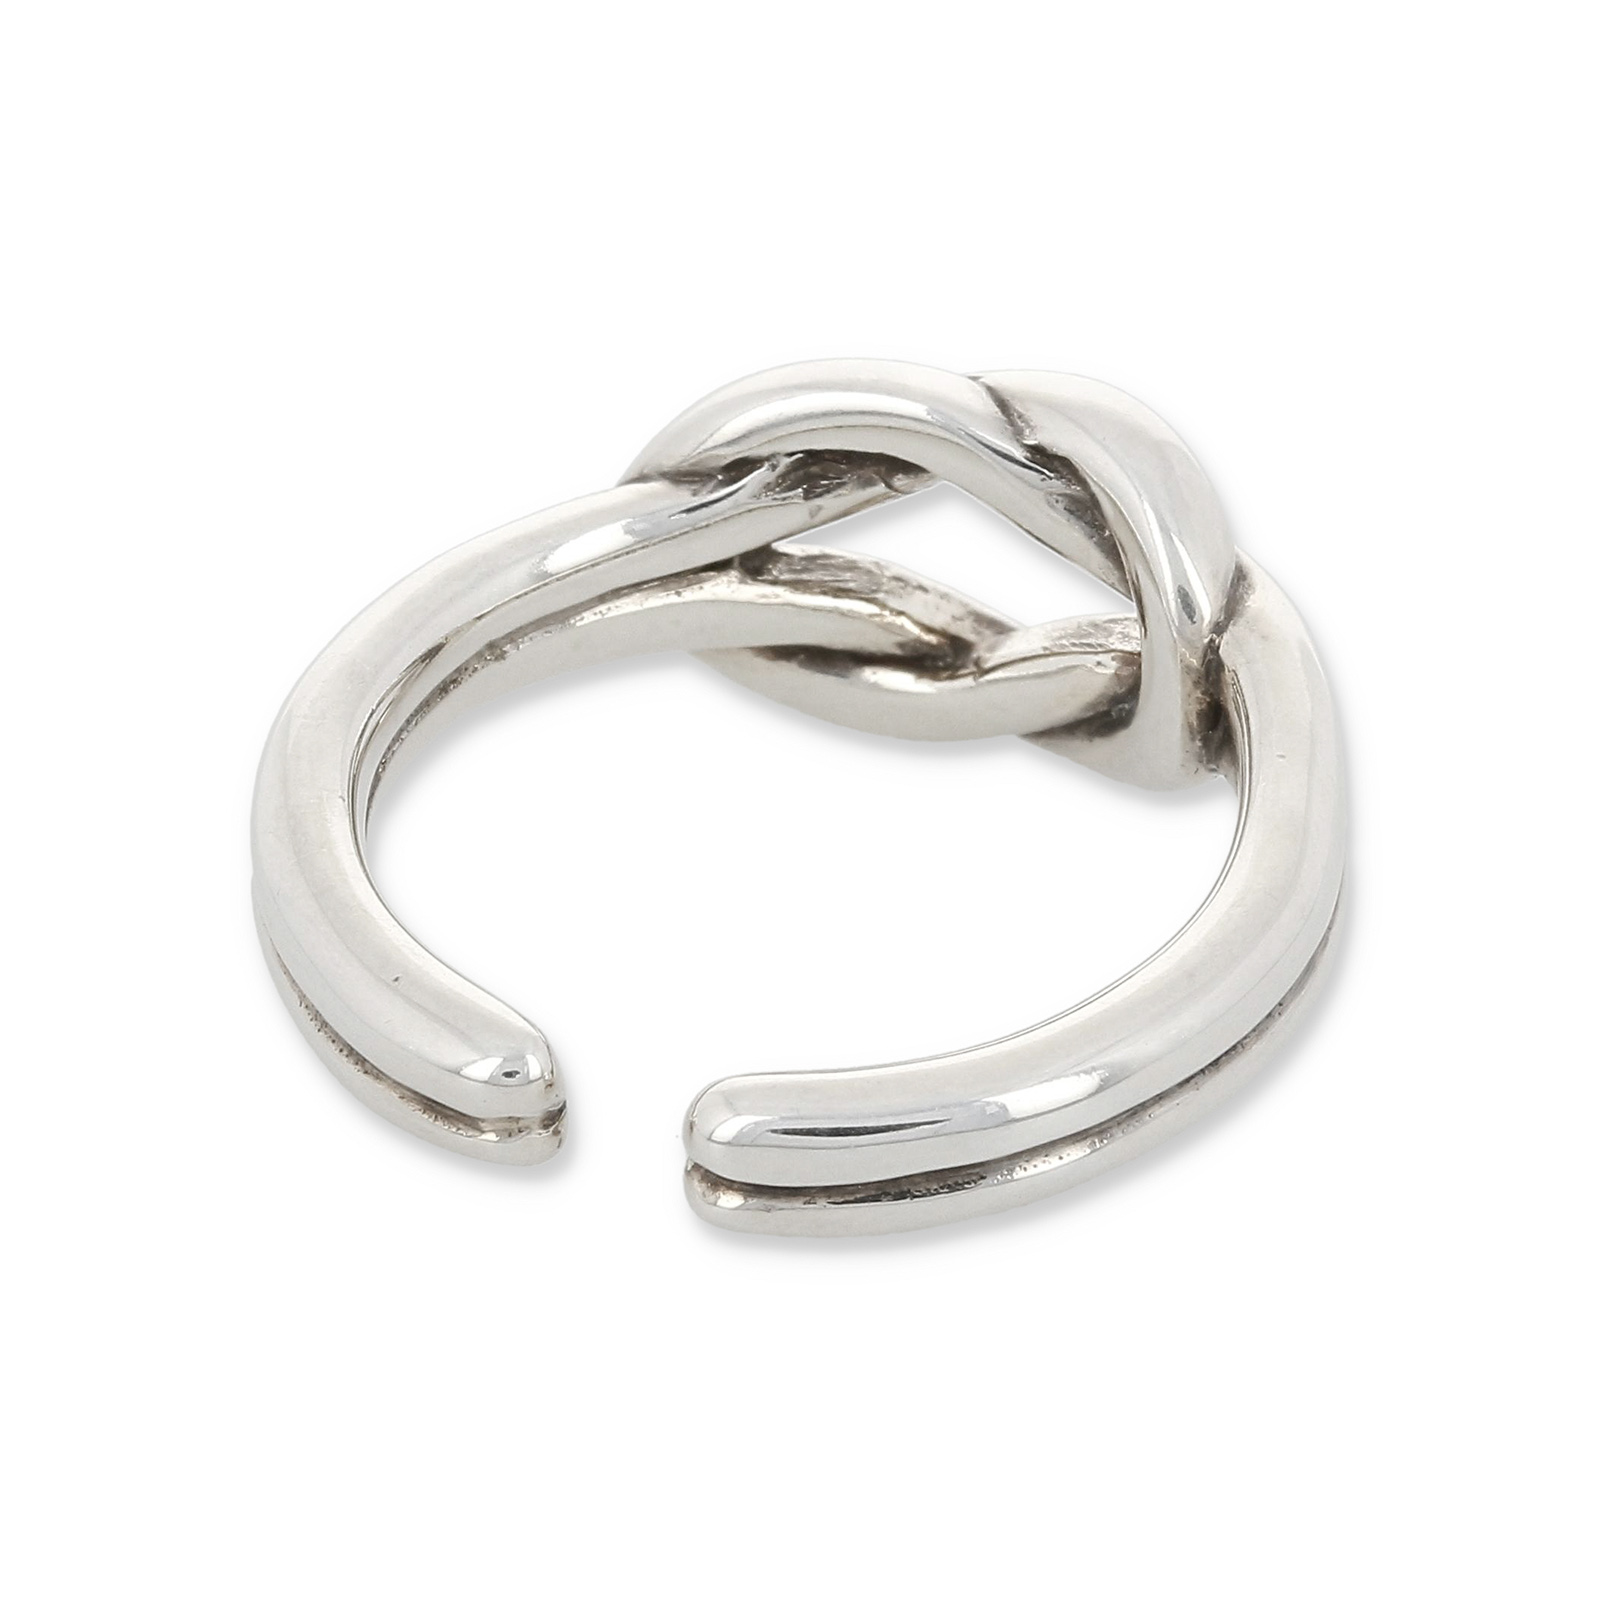 Edy Ring - Silver Color